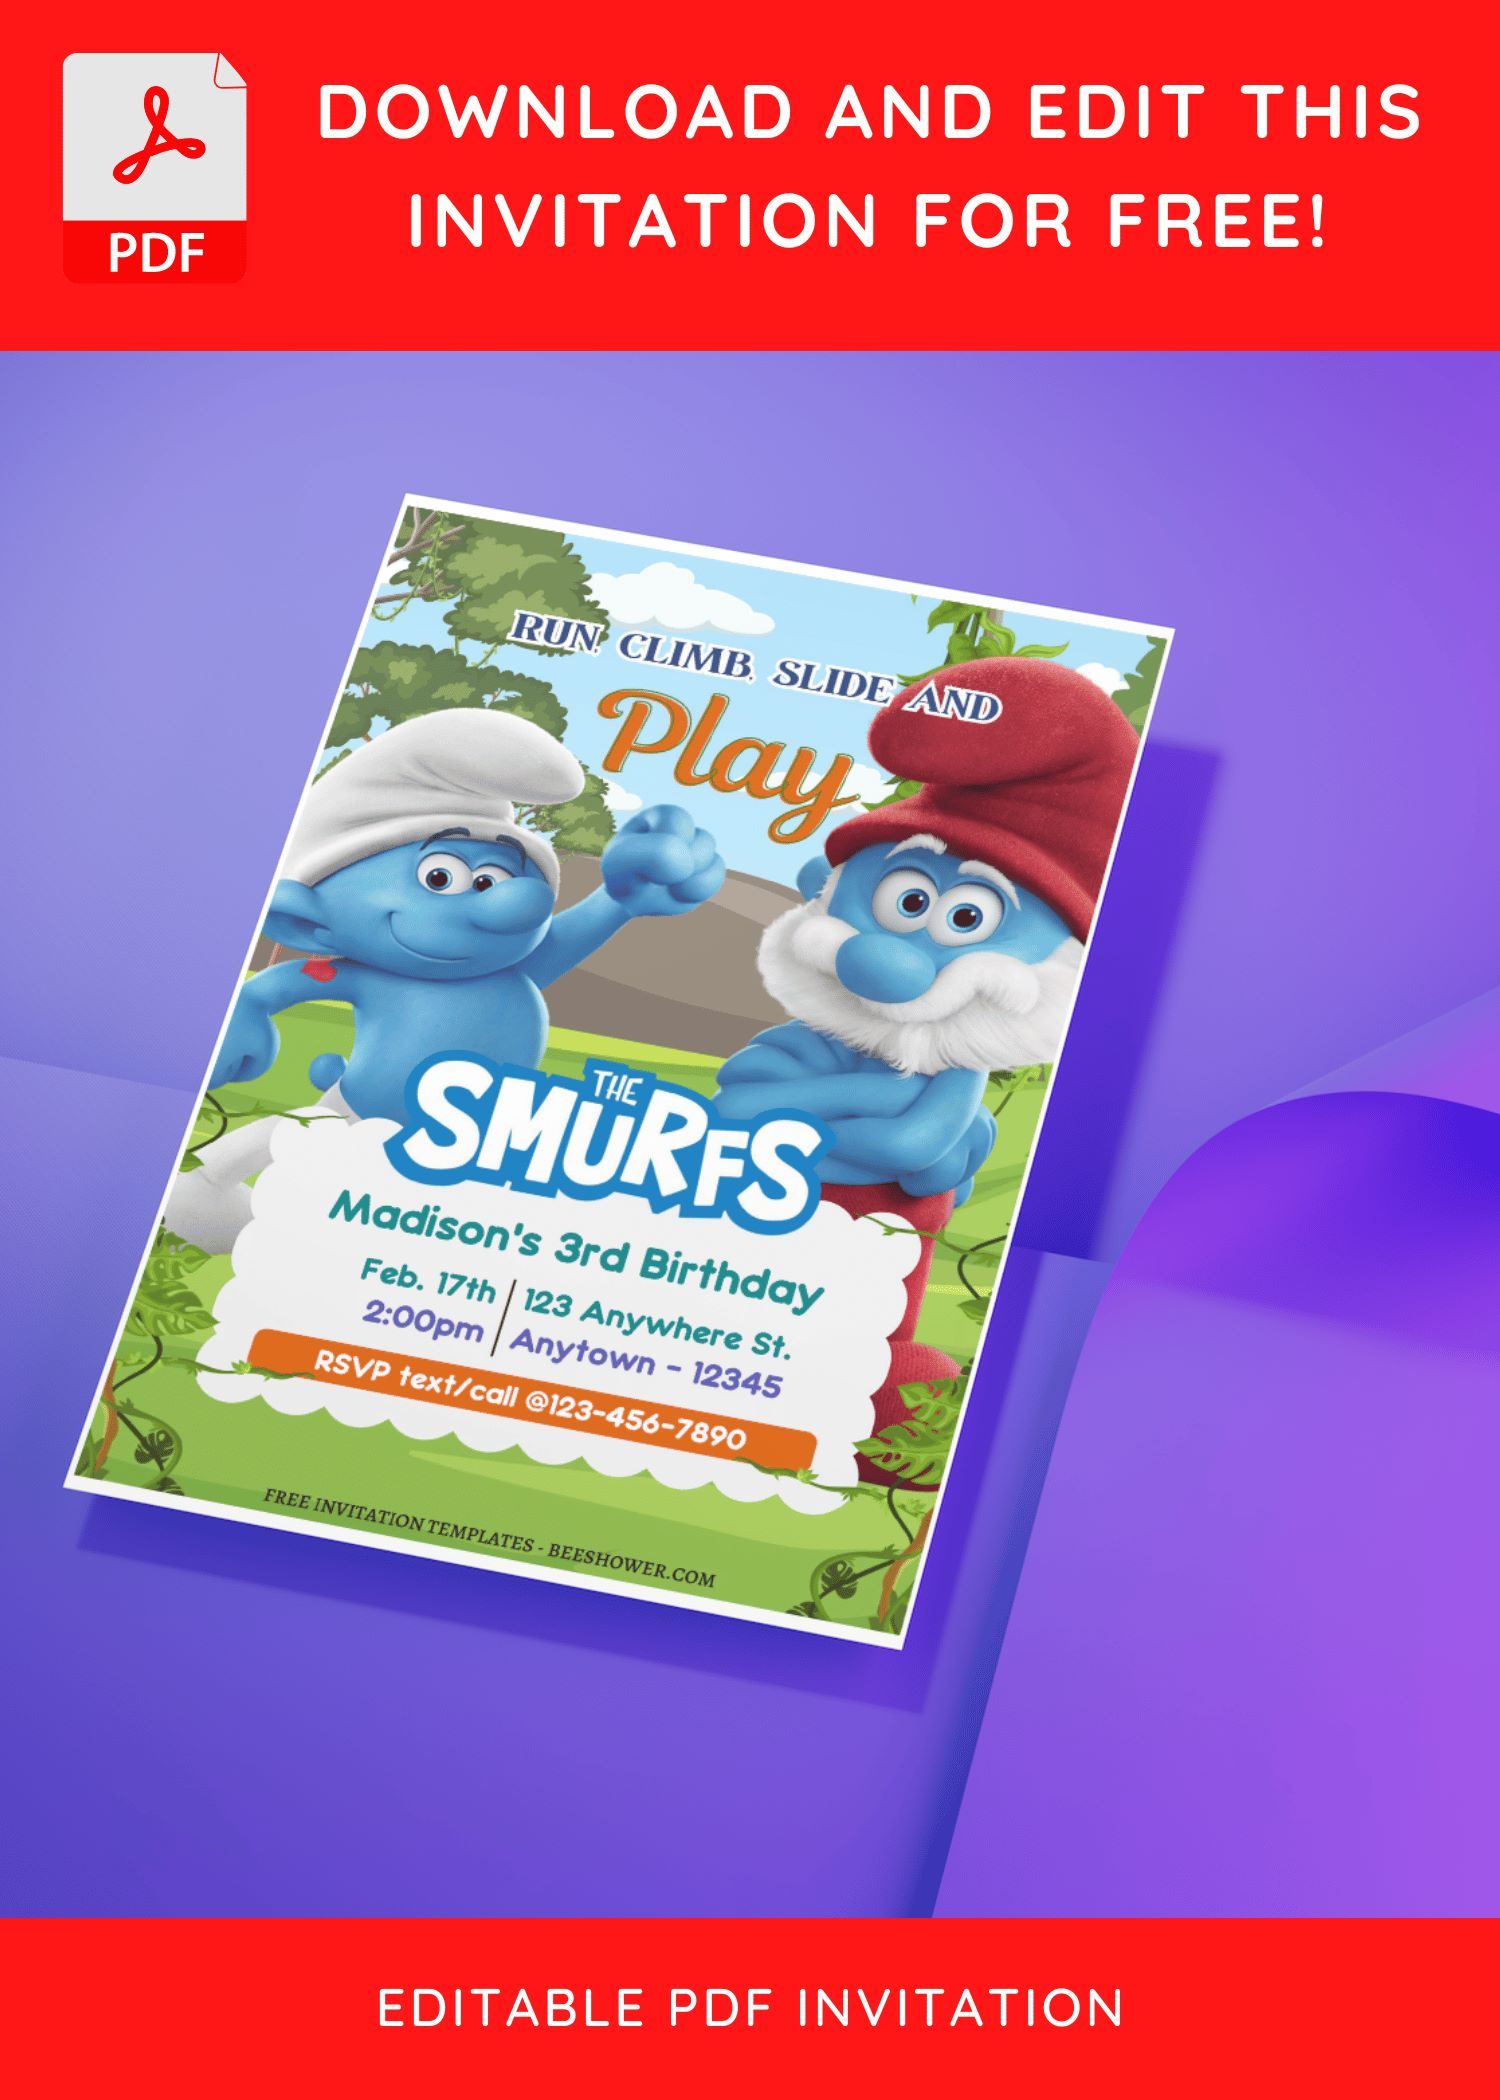 (Free Editable PDF) Smurf's Up! Baby Shower Invitation Templates C